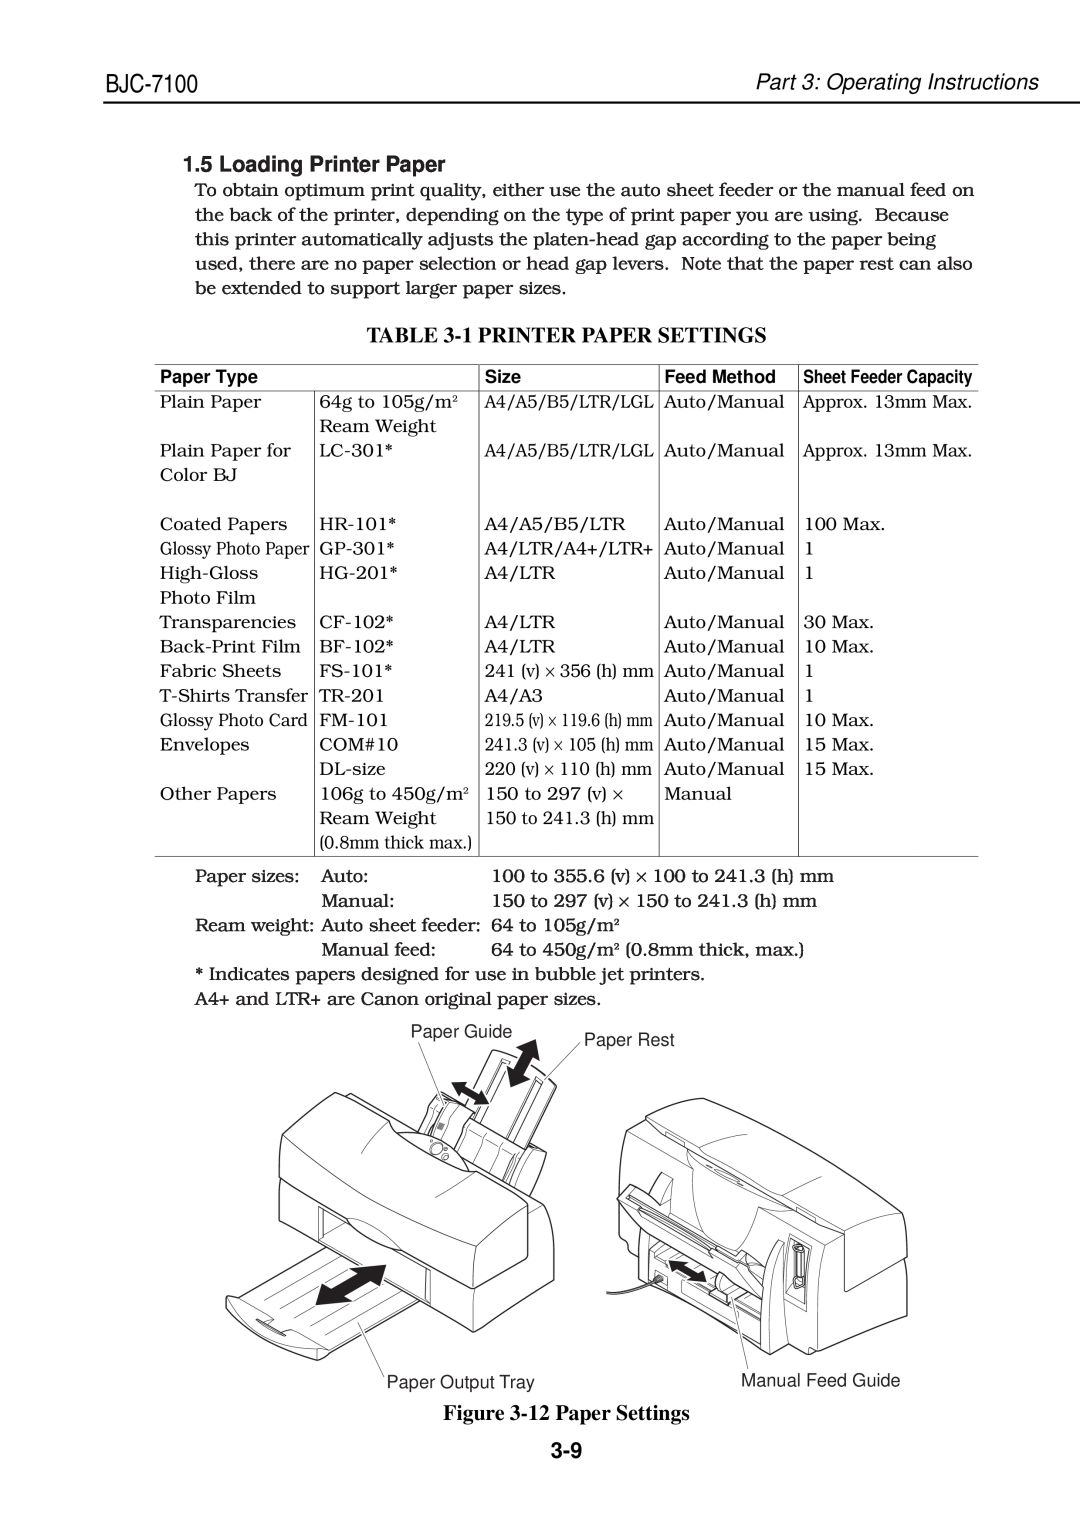 Canon QY8-1360-000 manual Loading Printer Paper, 1 PRINTER PAPER SETTINGS, 12 Paper Settings, BJC-7100 